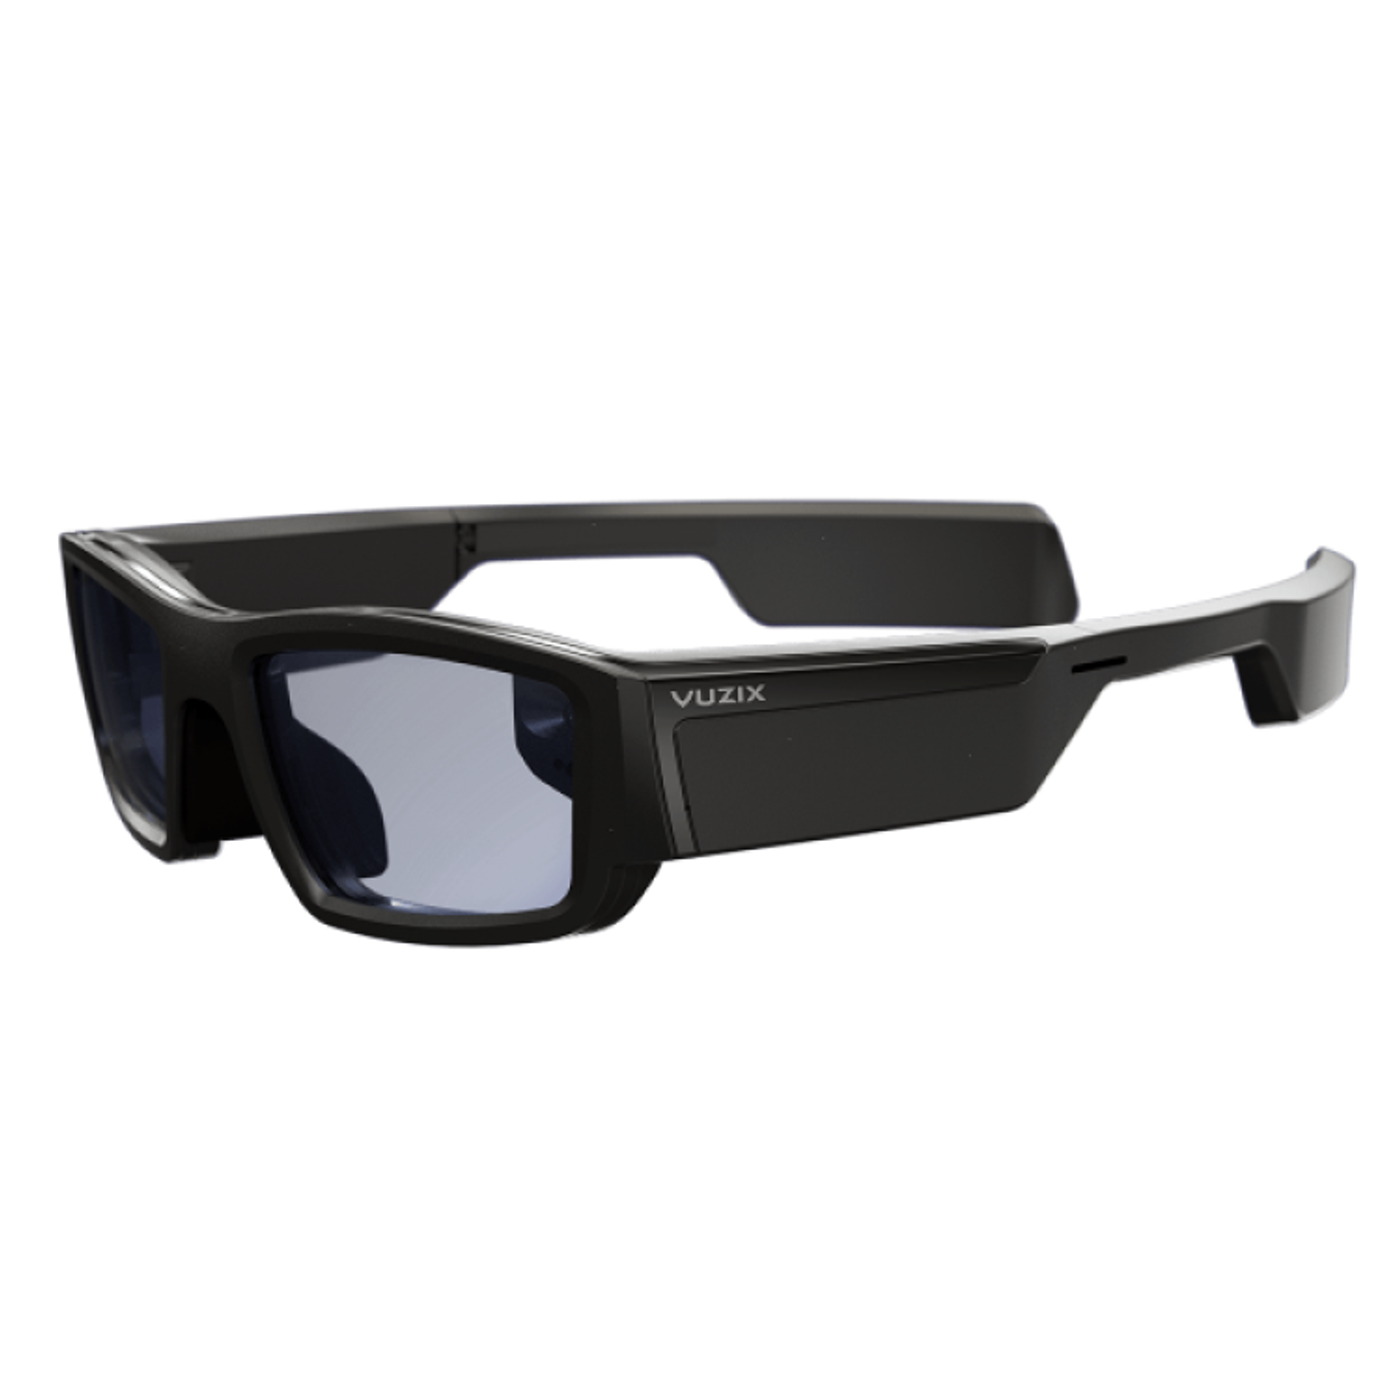 Best AR Glasses 2023 Our top picks for smart glasses